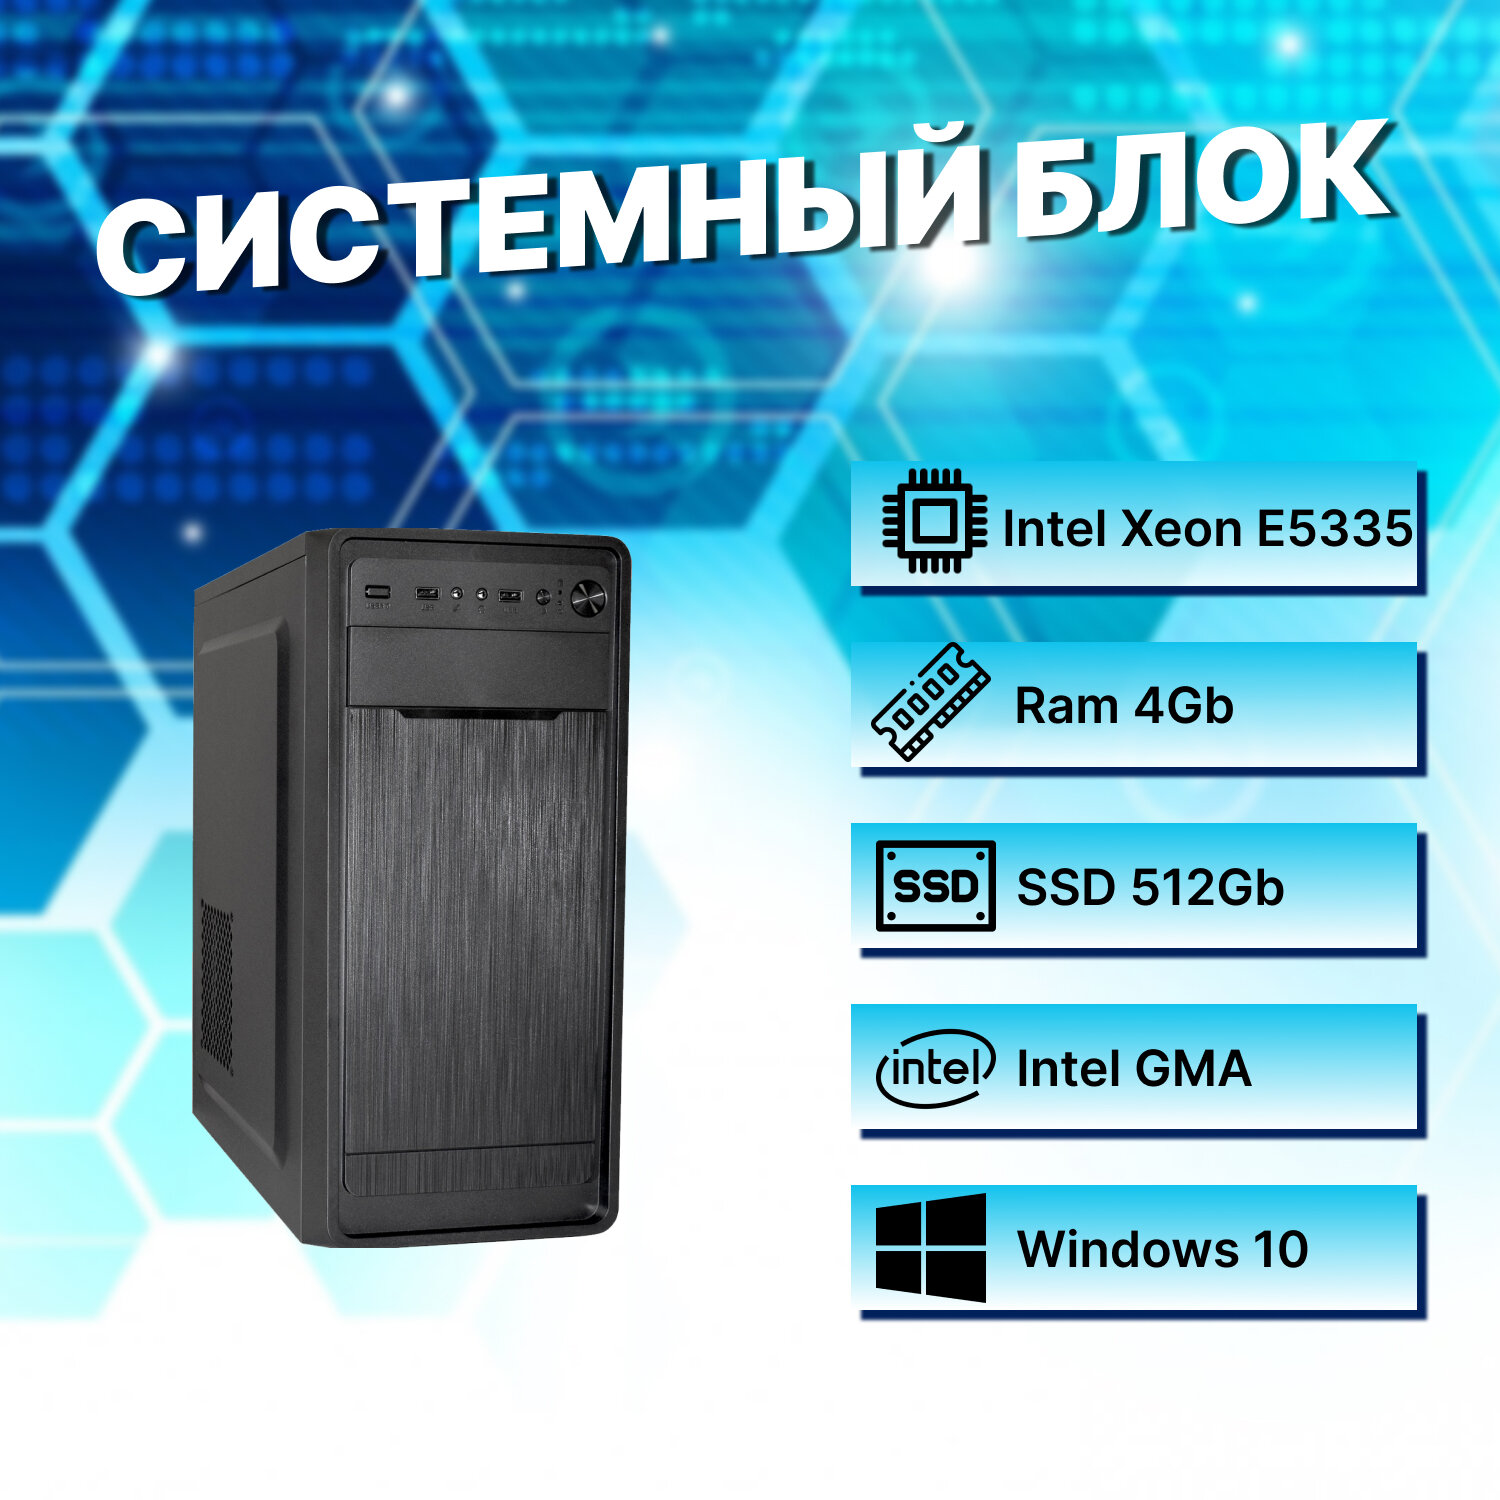 Системный блок Intel Xeon E5335 (2.0ГГц)/ RAM 4Gb/ SSD 512Gb/ Intel GMA/ Windows 10 Pro